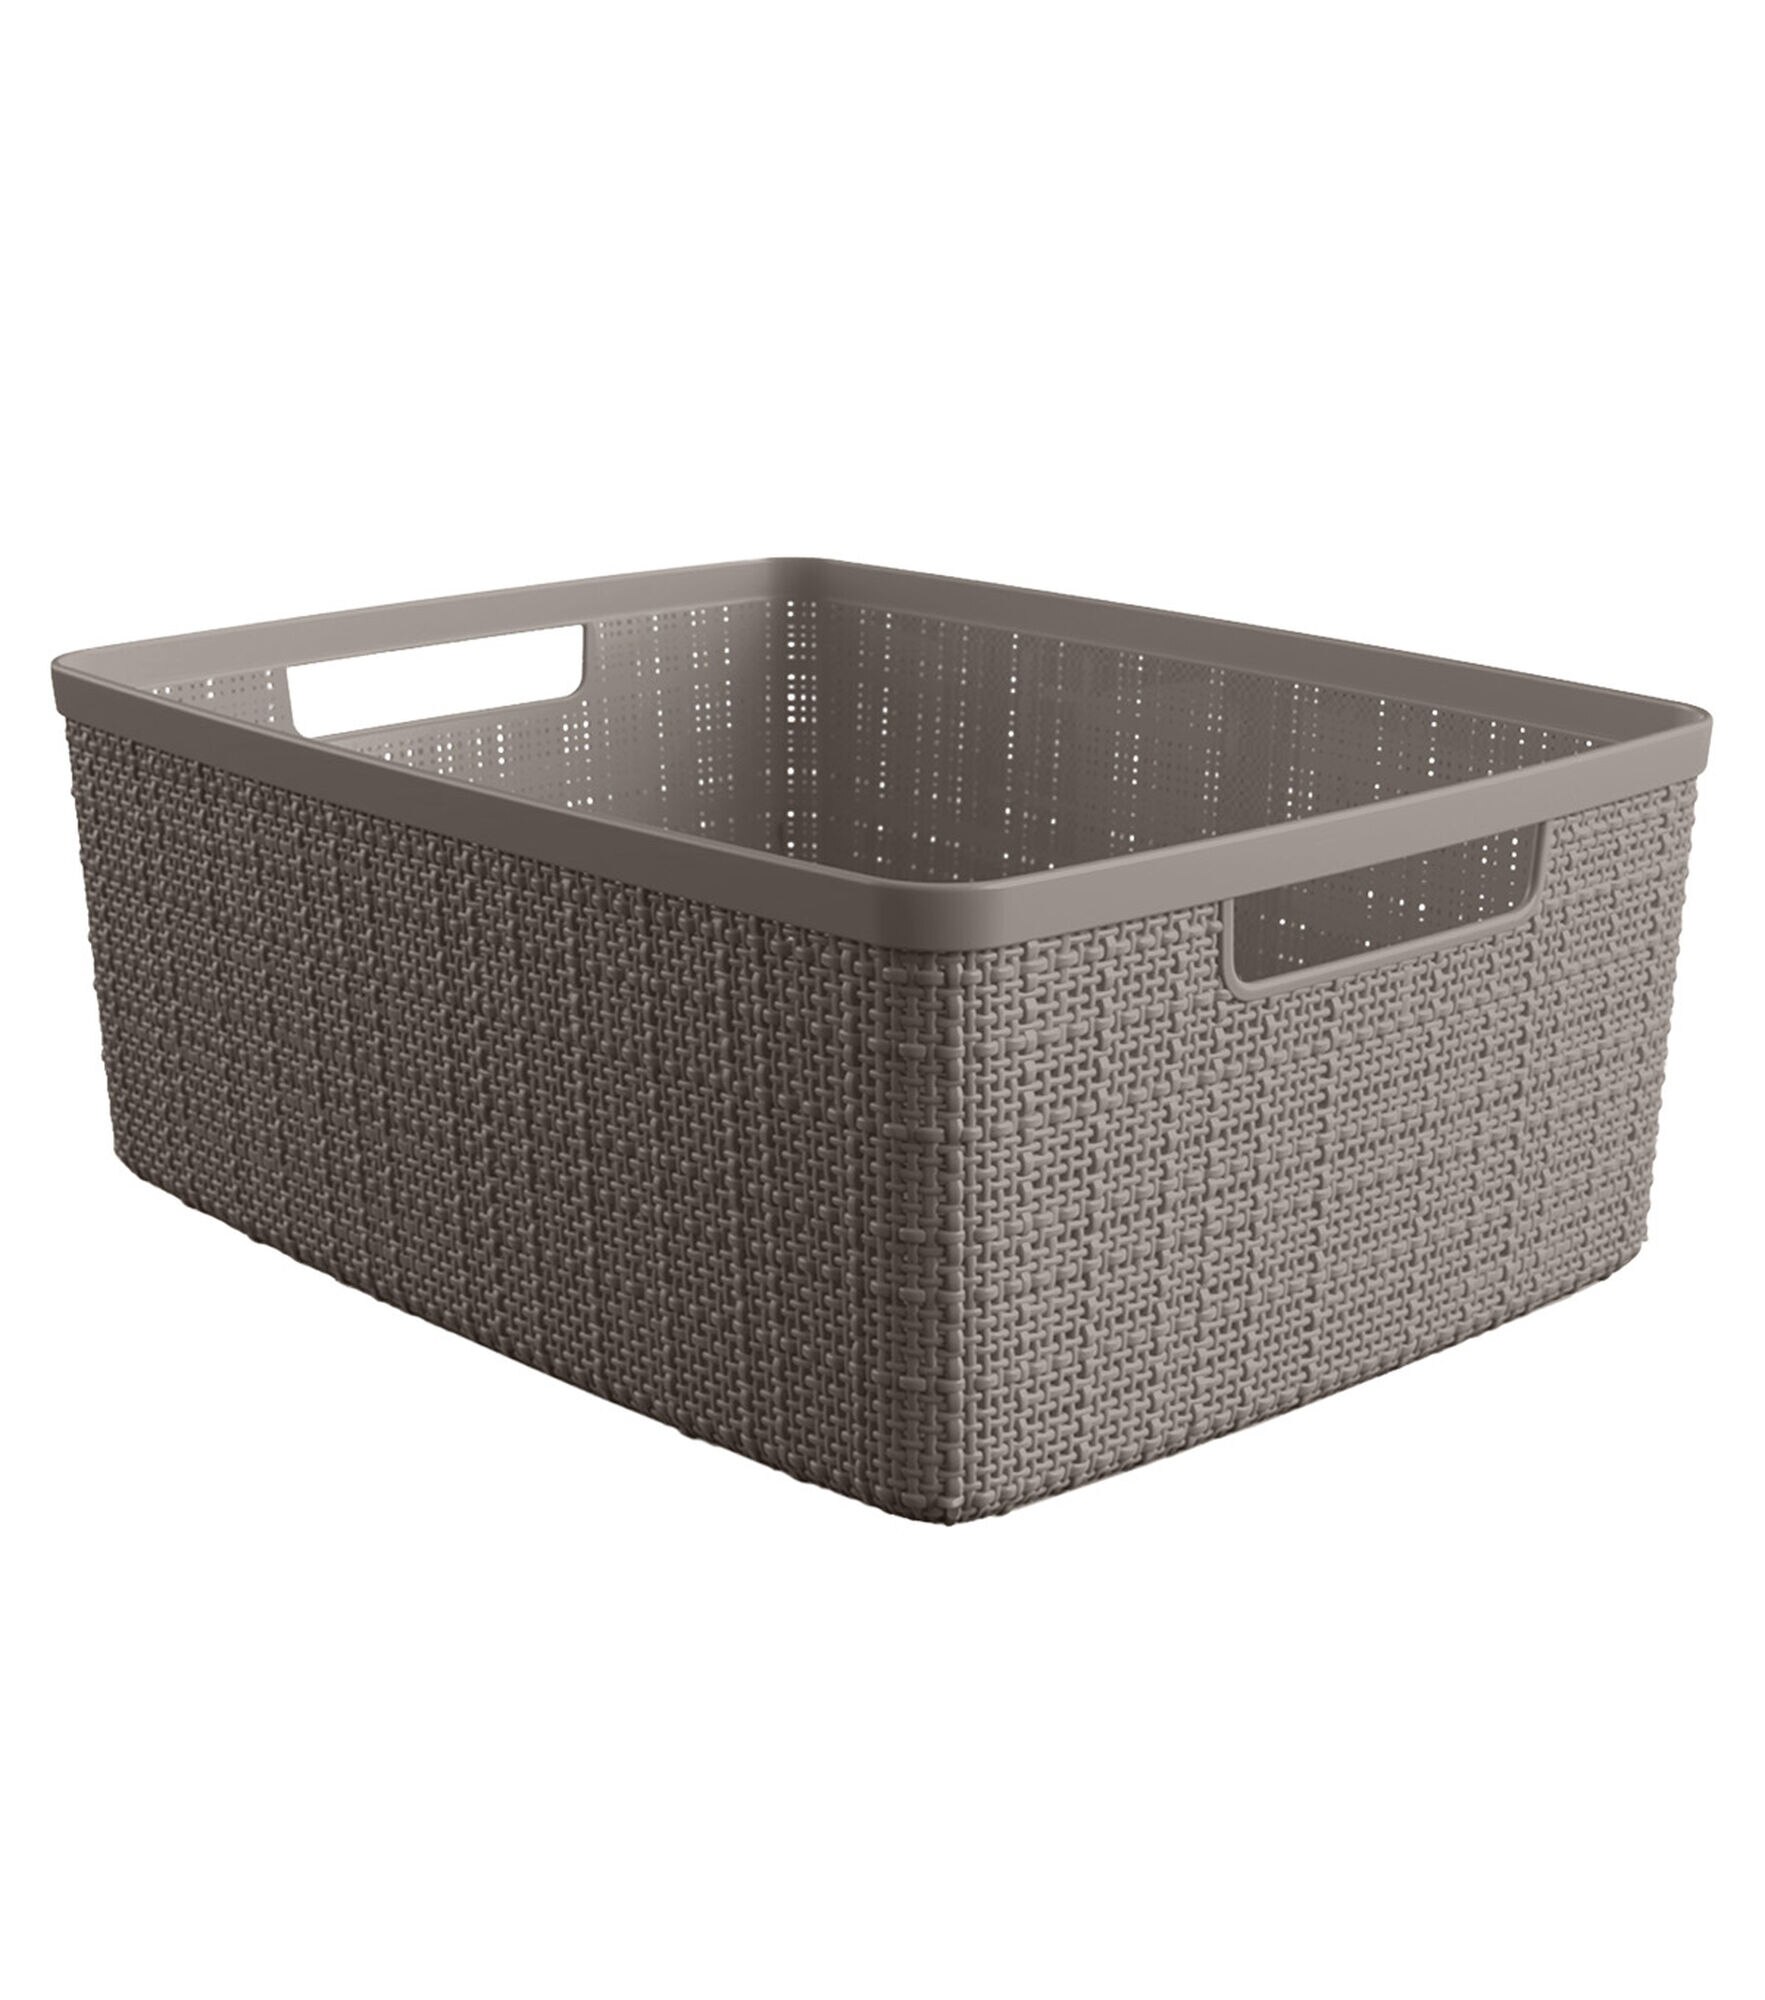 12 Liter Resin Basket With Cutout Handles, Cobblestone, hi-res